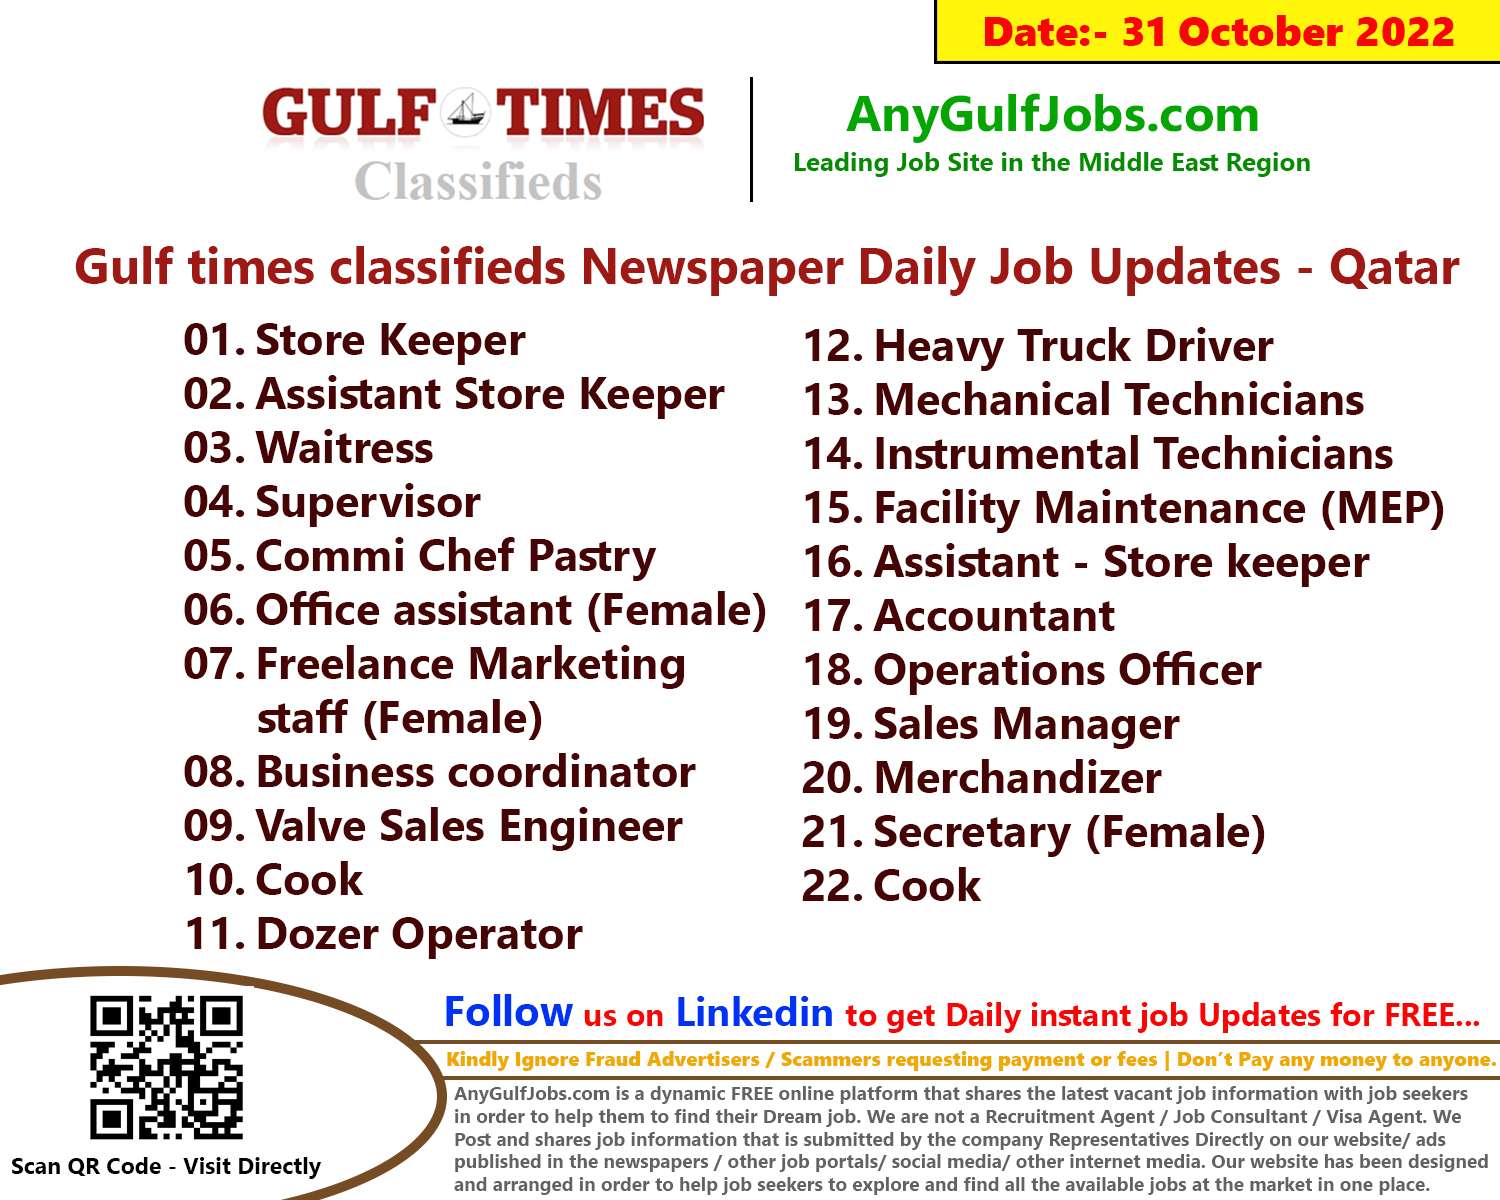 Gulf times classifieds Job Vacancies Qatar - 31 October 2022